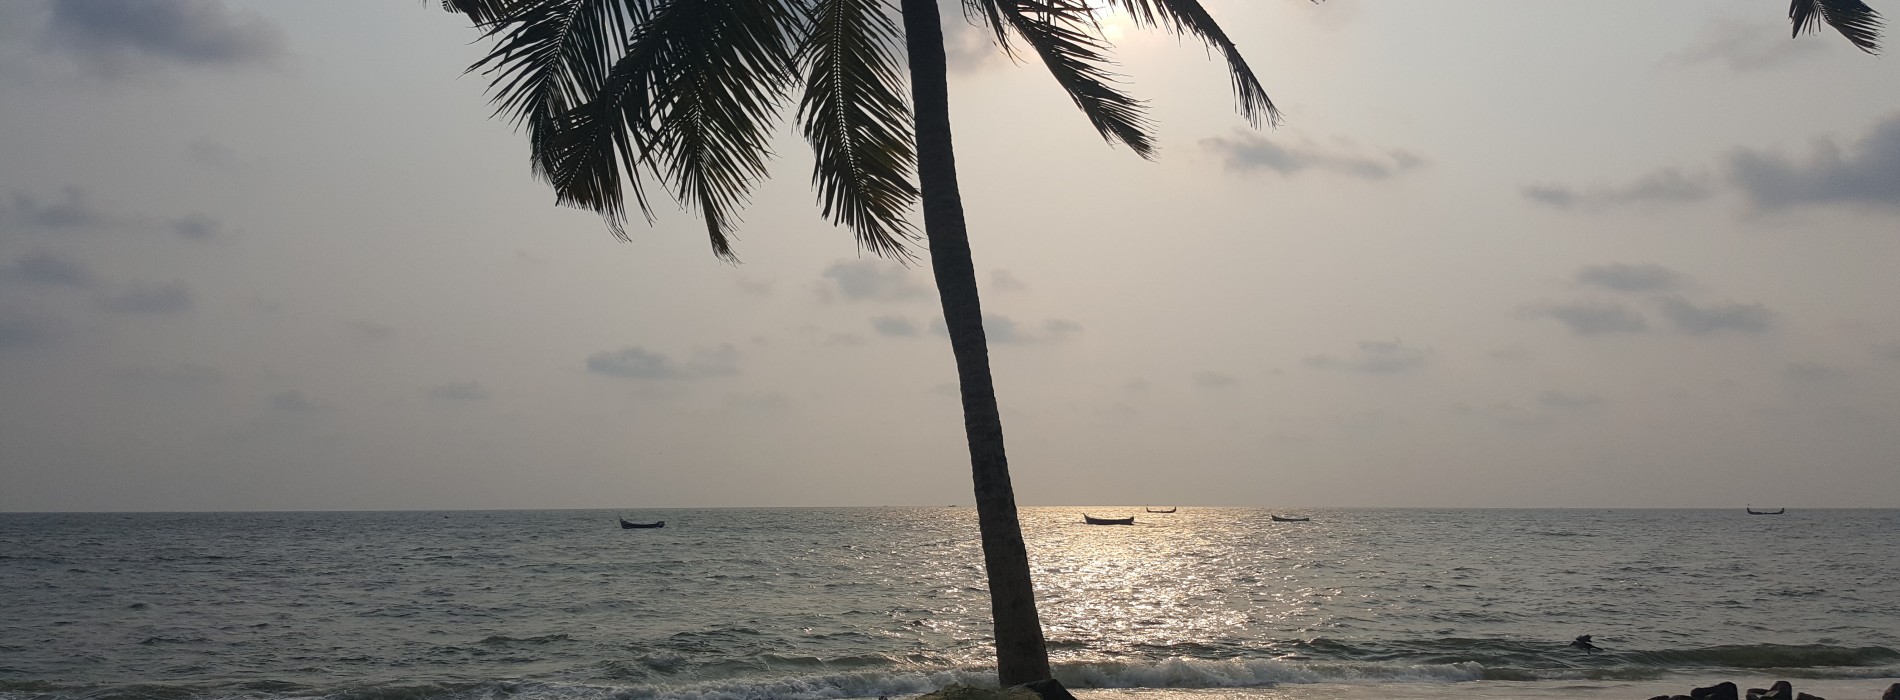 Marari Beach Palm Tree.jpg